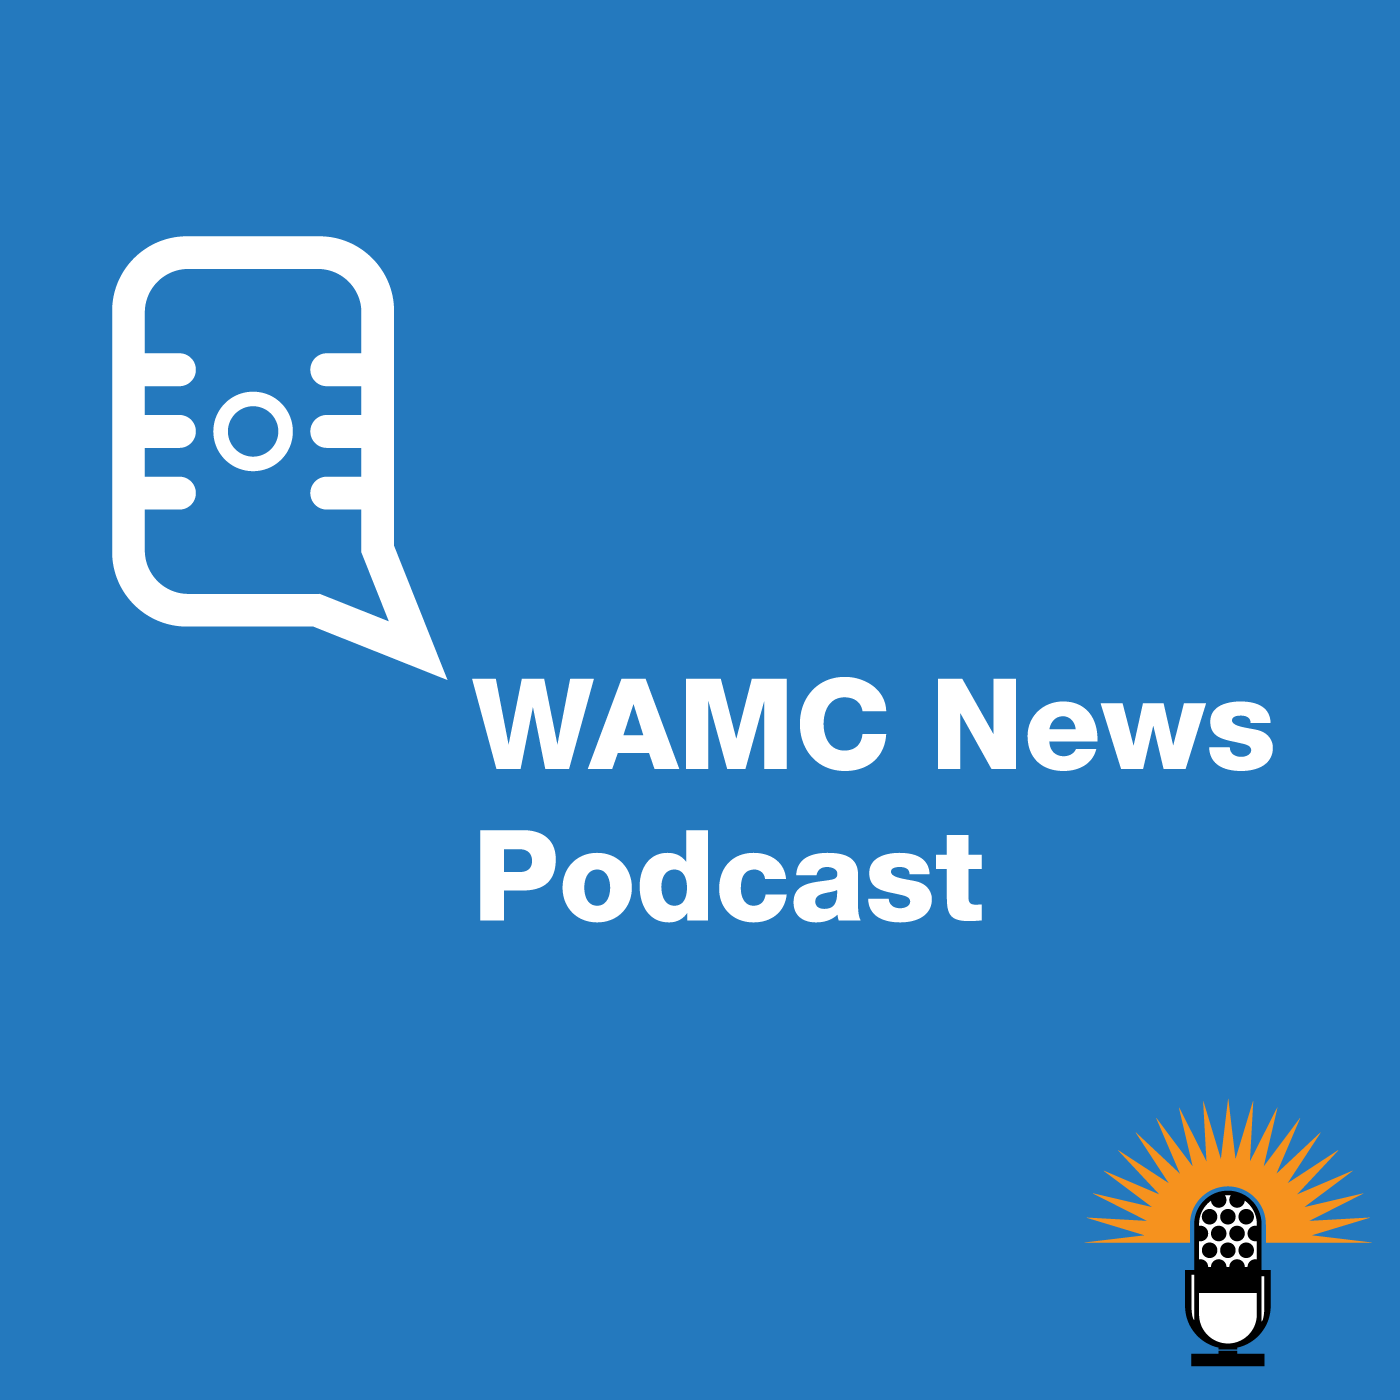 WAMC News Podcast - Episode 272